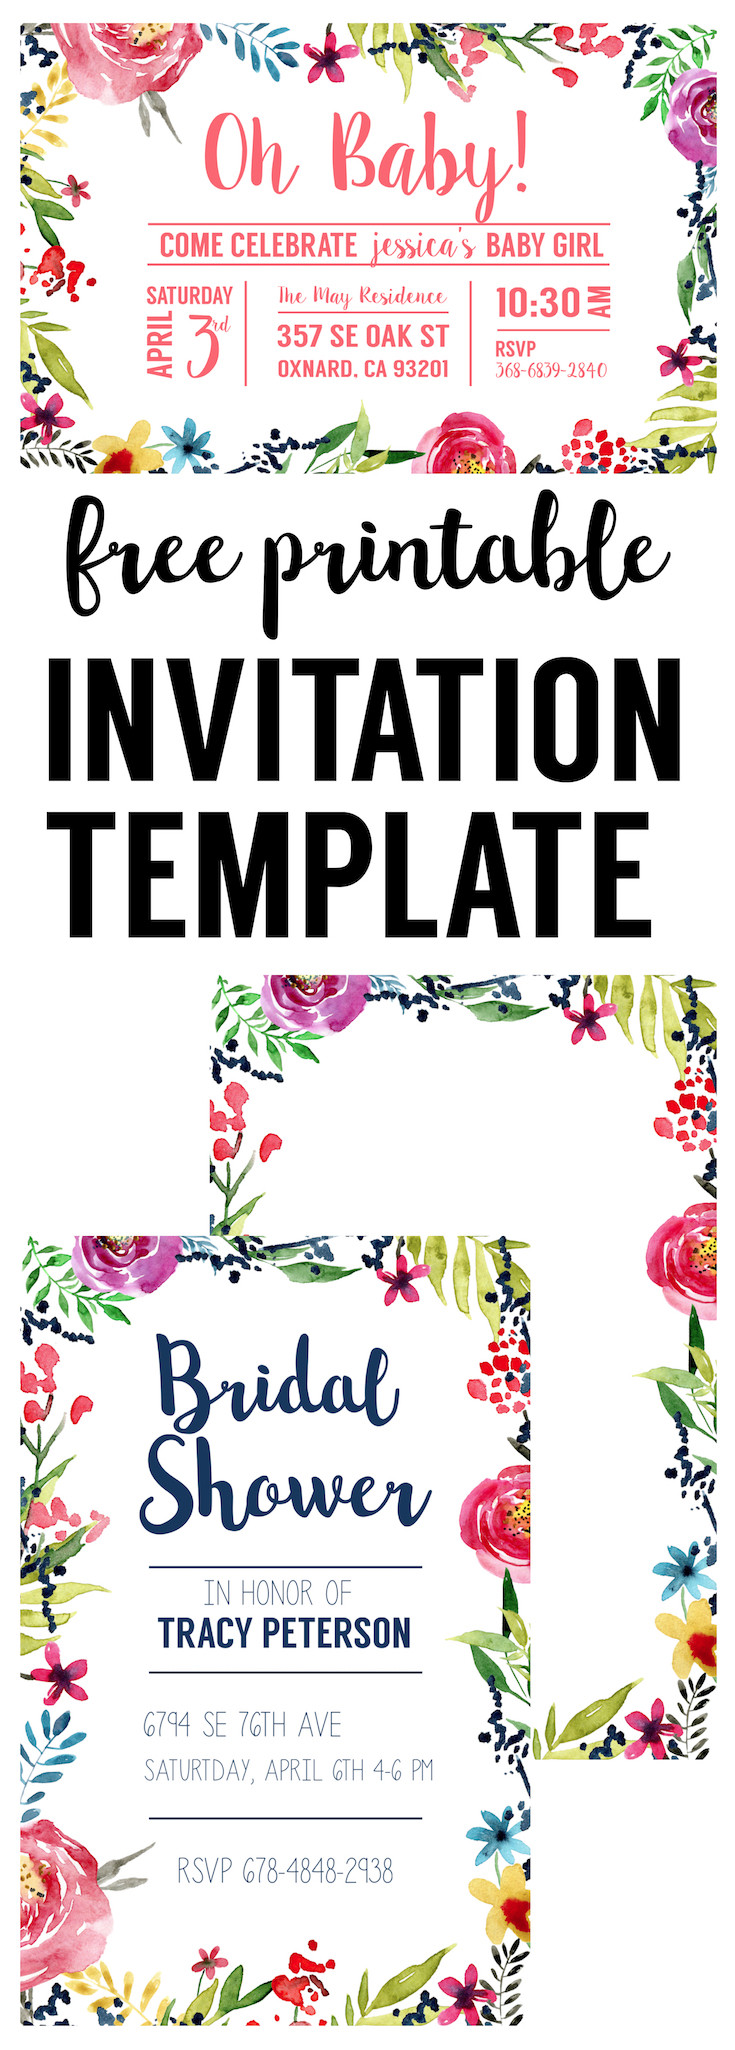 Free Birthday Invitations Templates
 Floral Borders Invitations Free Printable Invitation